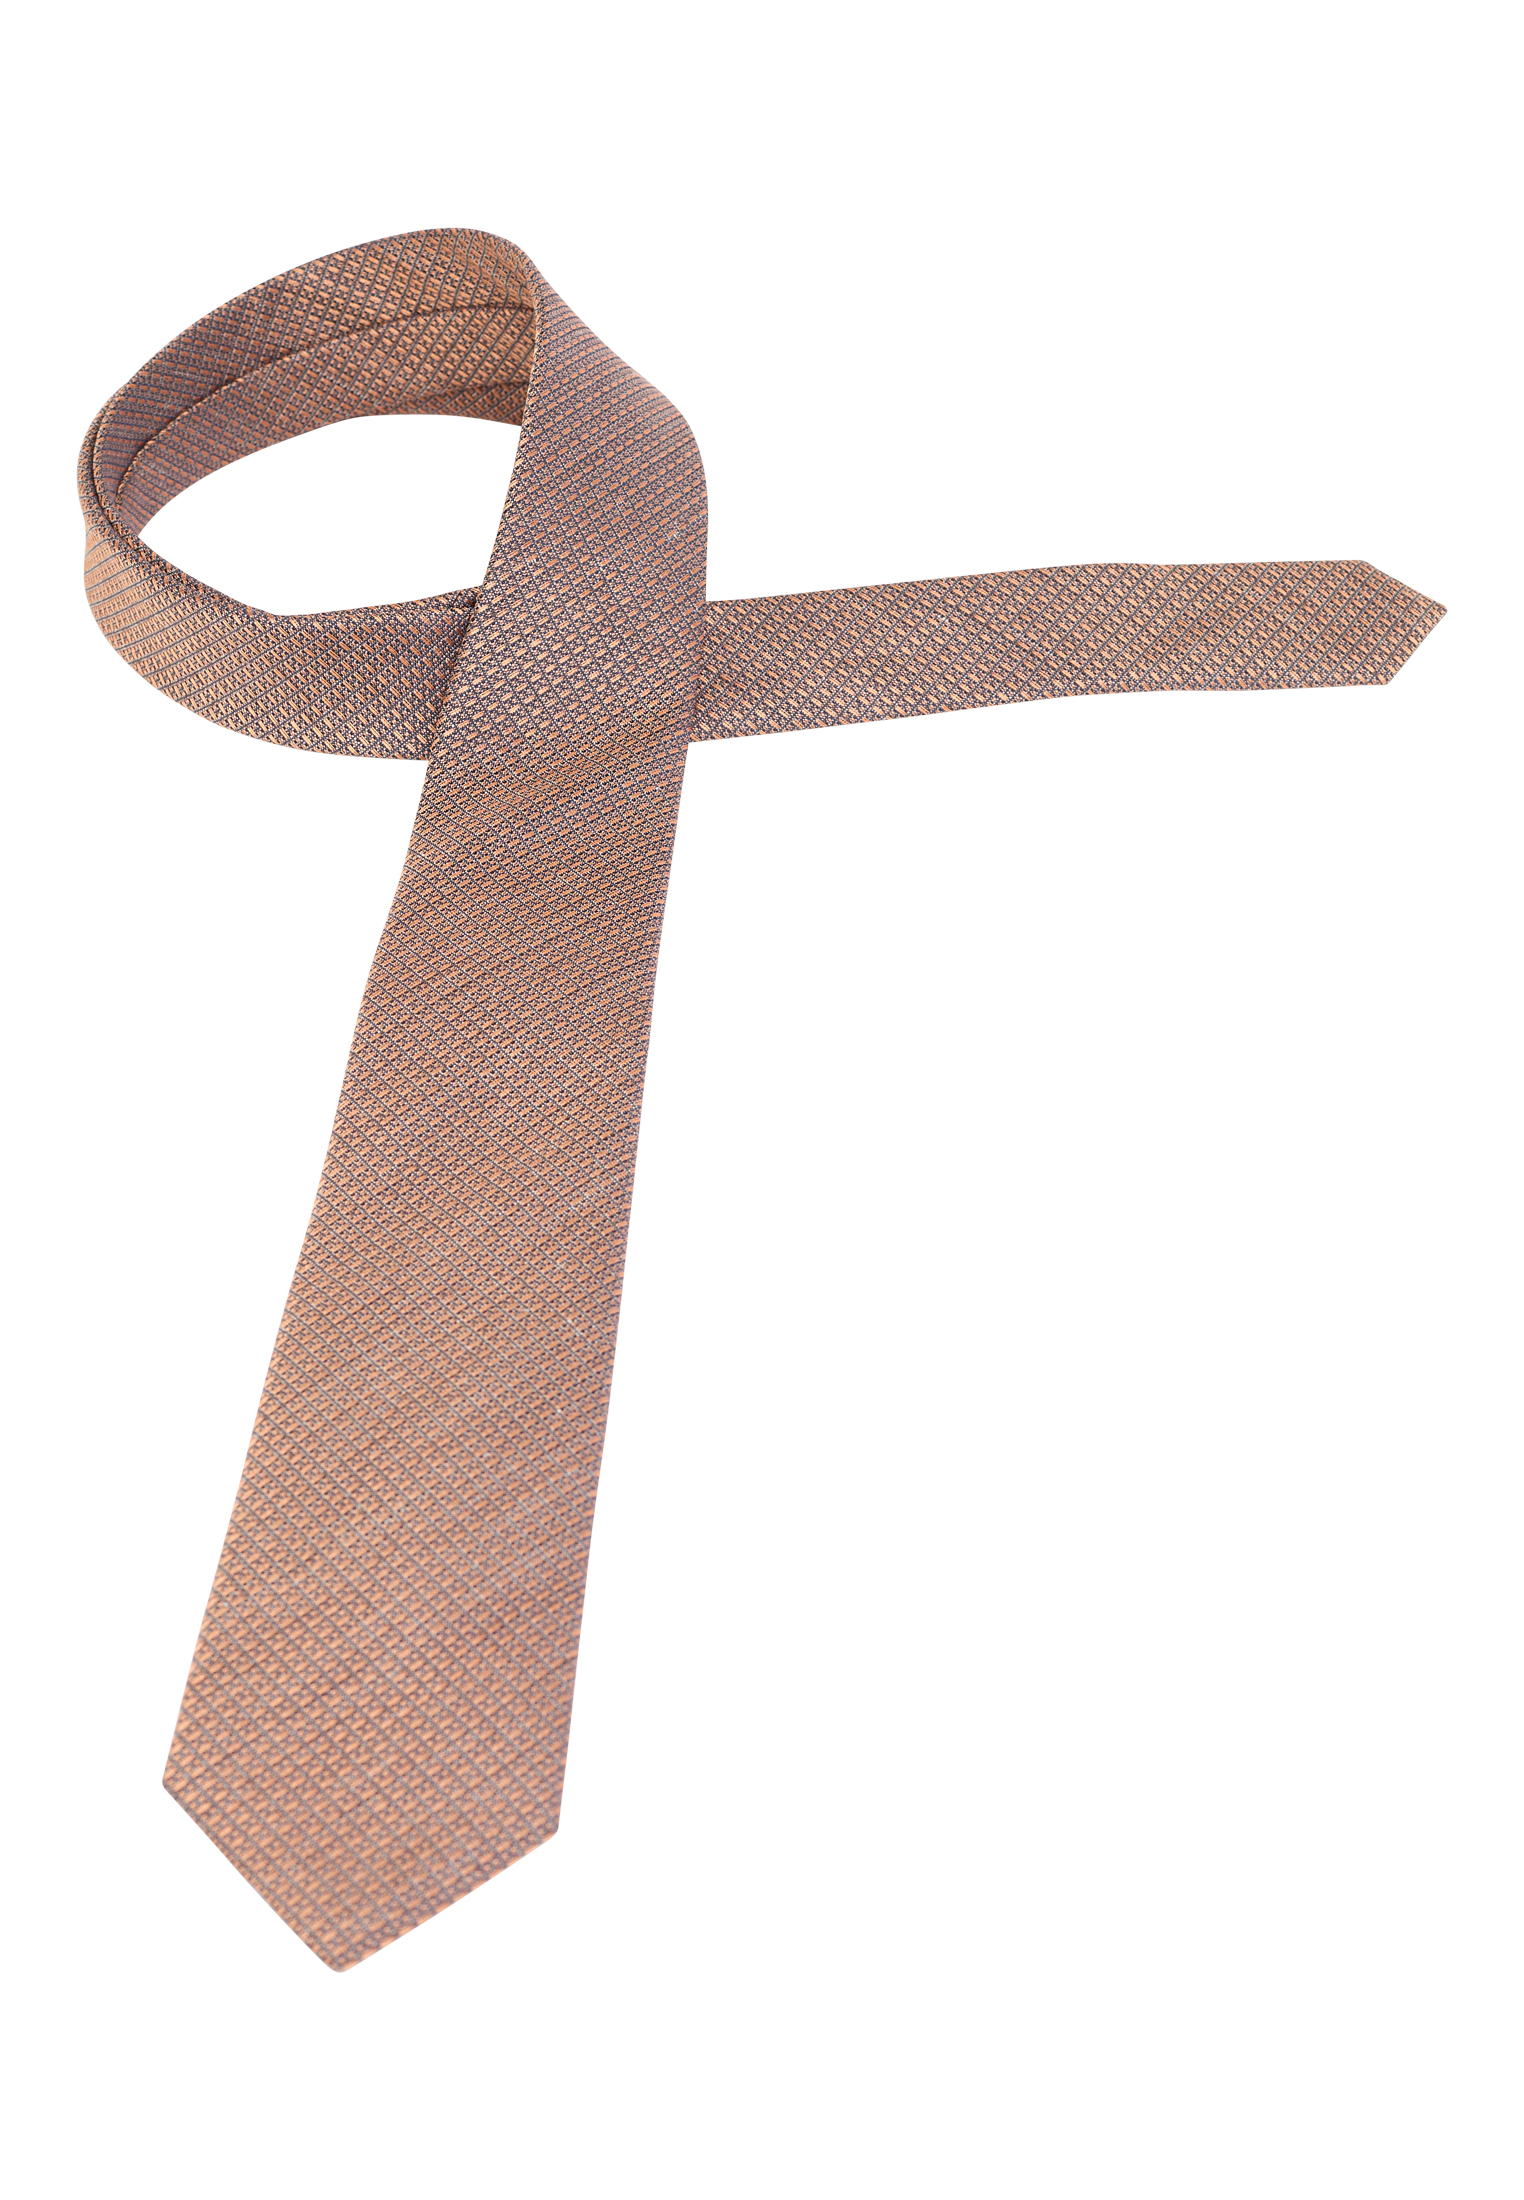 terracotta terracotta | Krawatte | | 142 gemustert 1AC01949-08-91-142 in